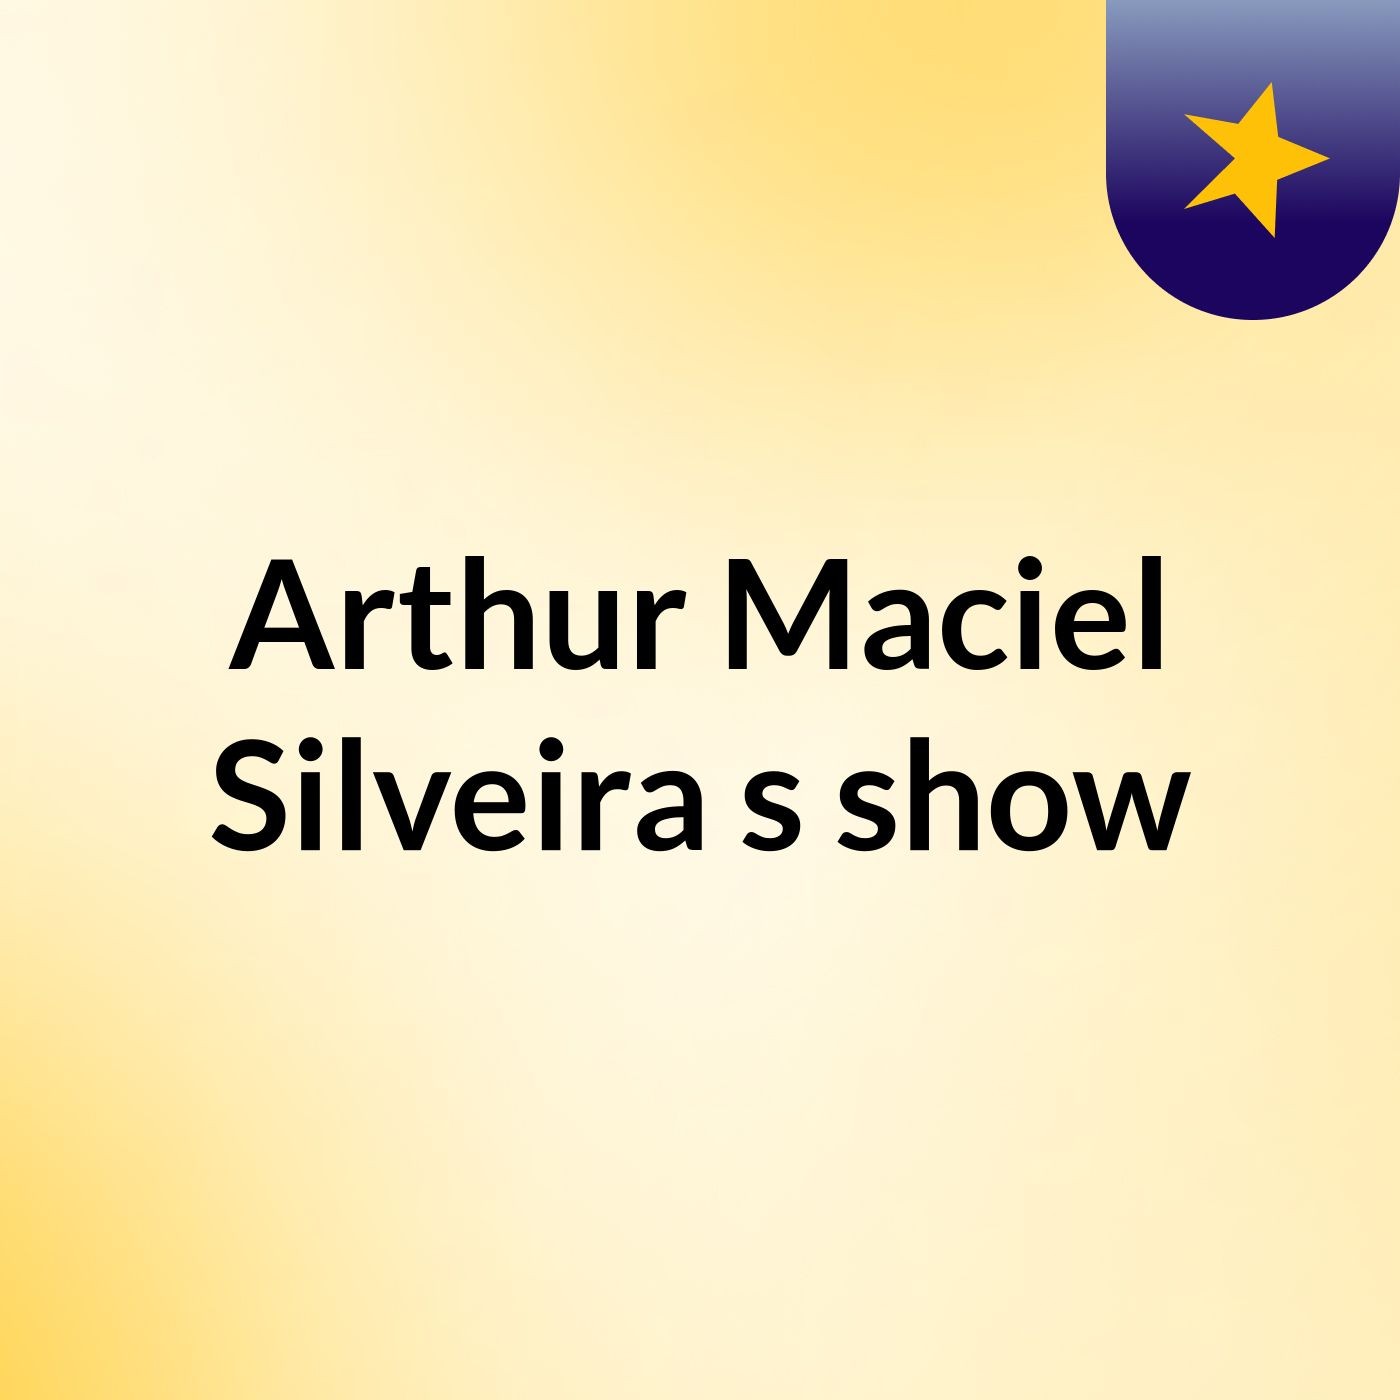 Arthur Maciel Silveira's show